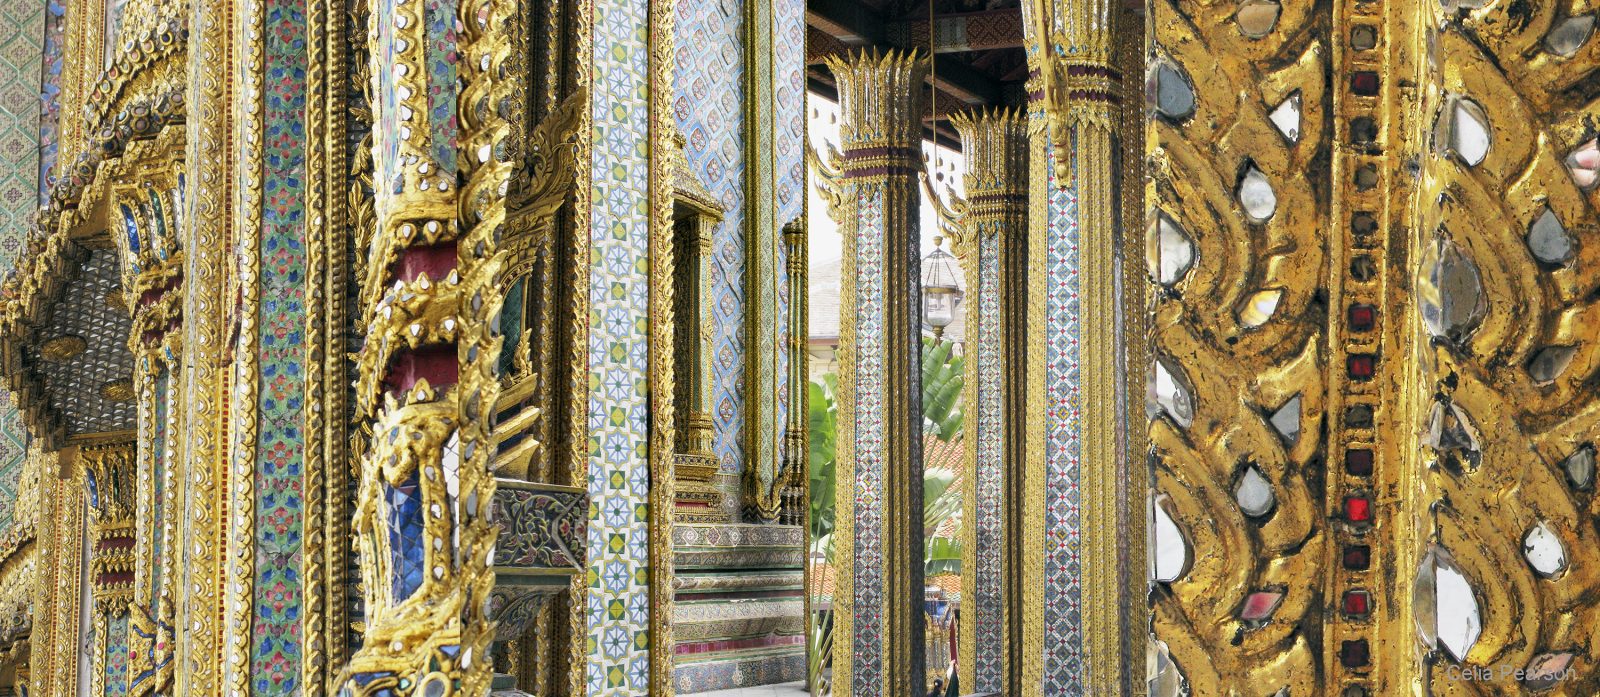 Celia Pearson. Palace (Thailand). 2010. archival inkjet print on cotton rag paper. 15.5 x 35.5